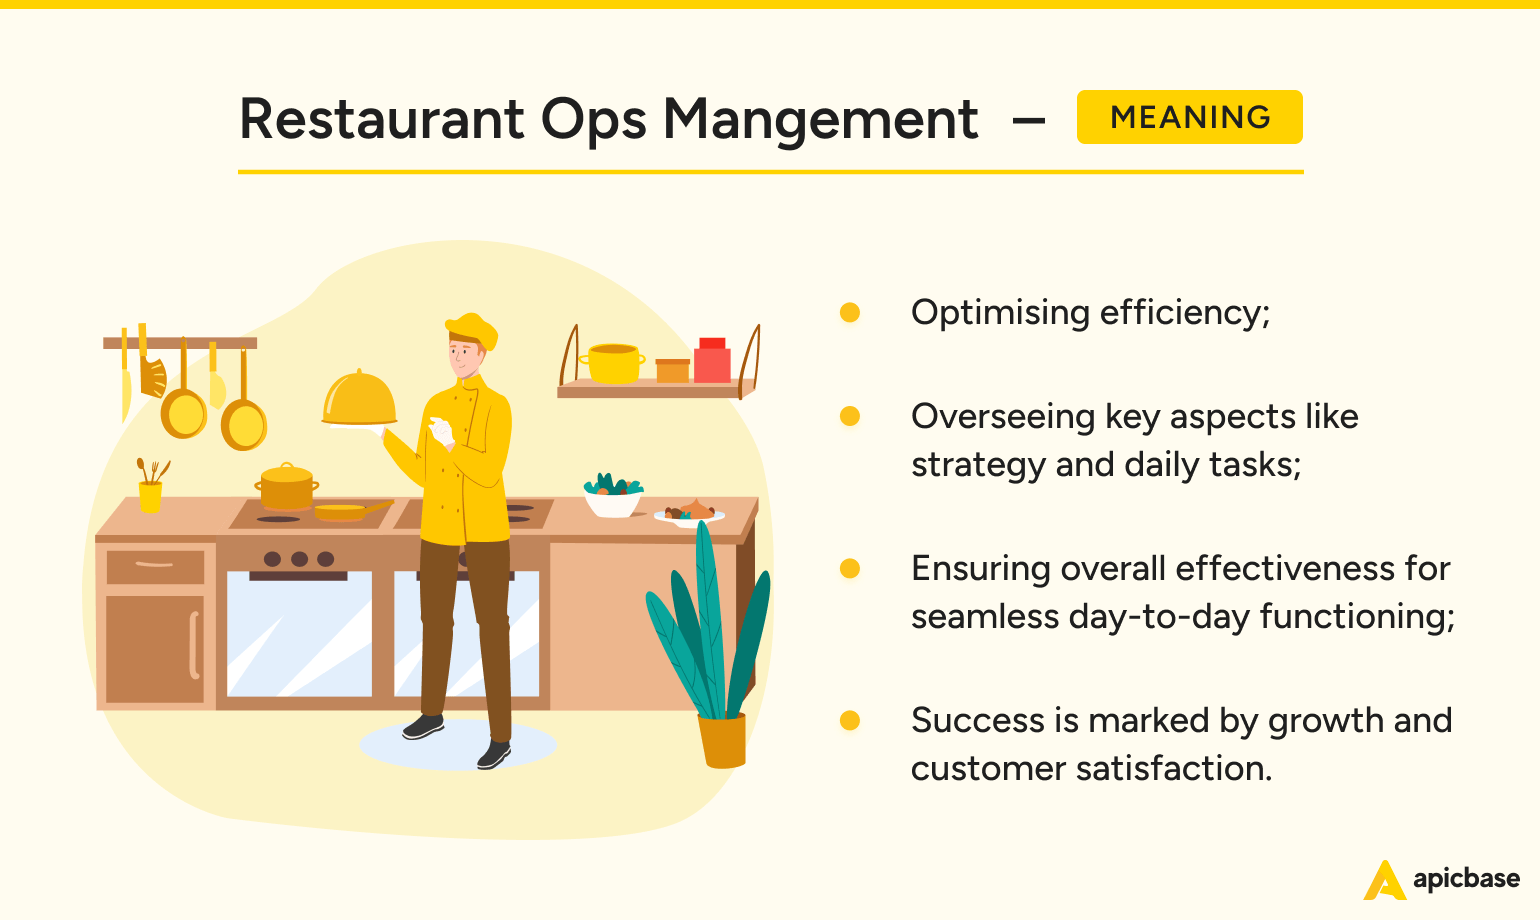 Restaurant Operations Management - Definition